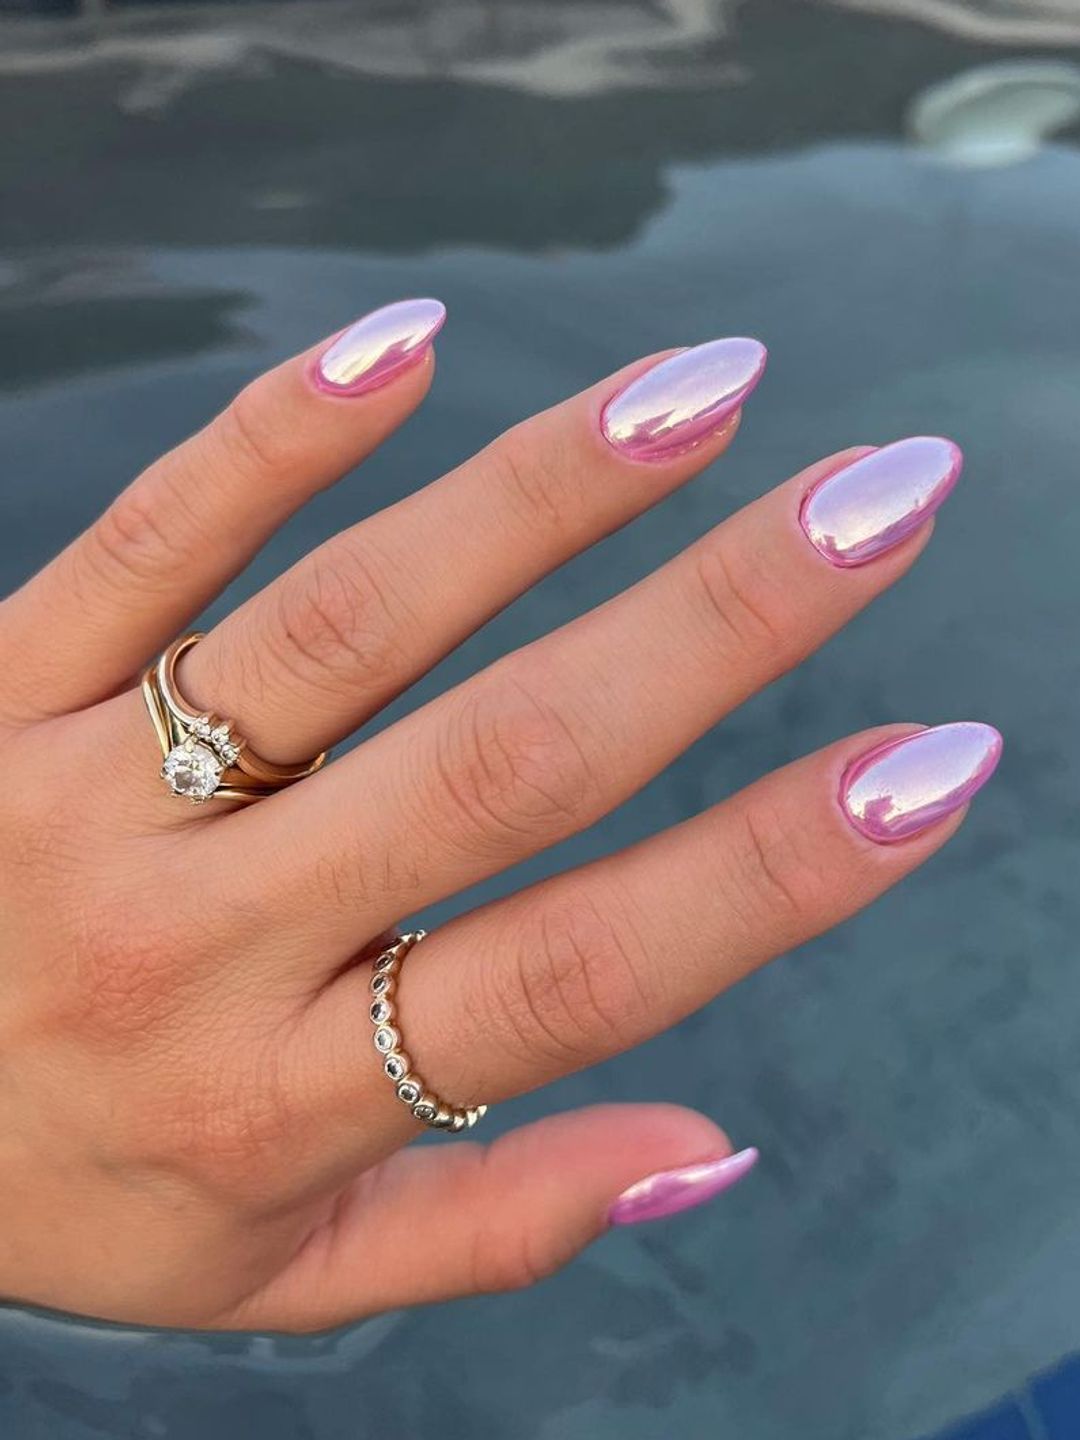 Lavender chrome nails 